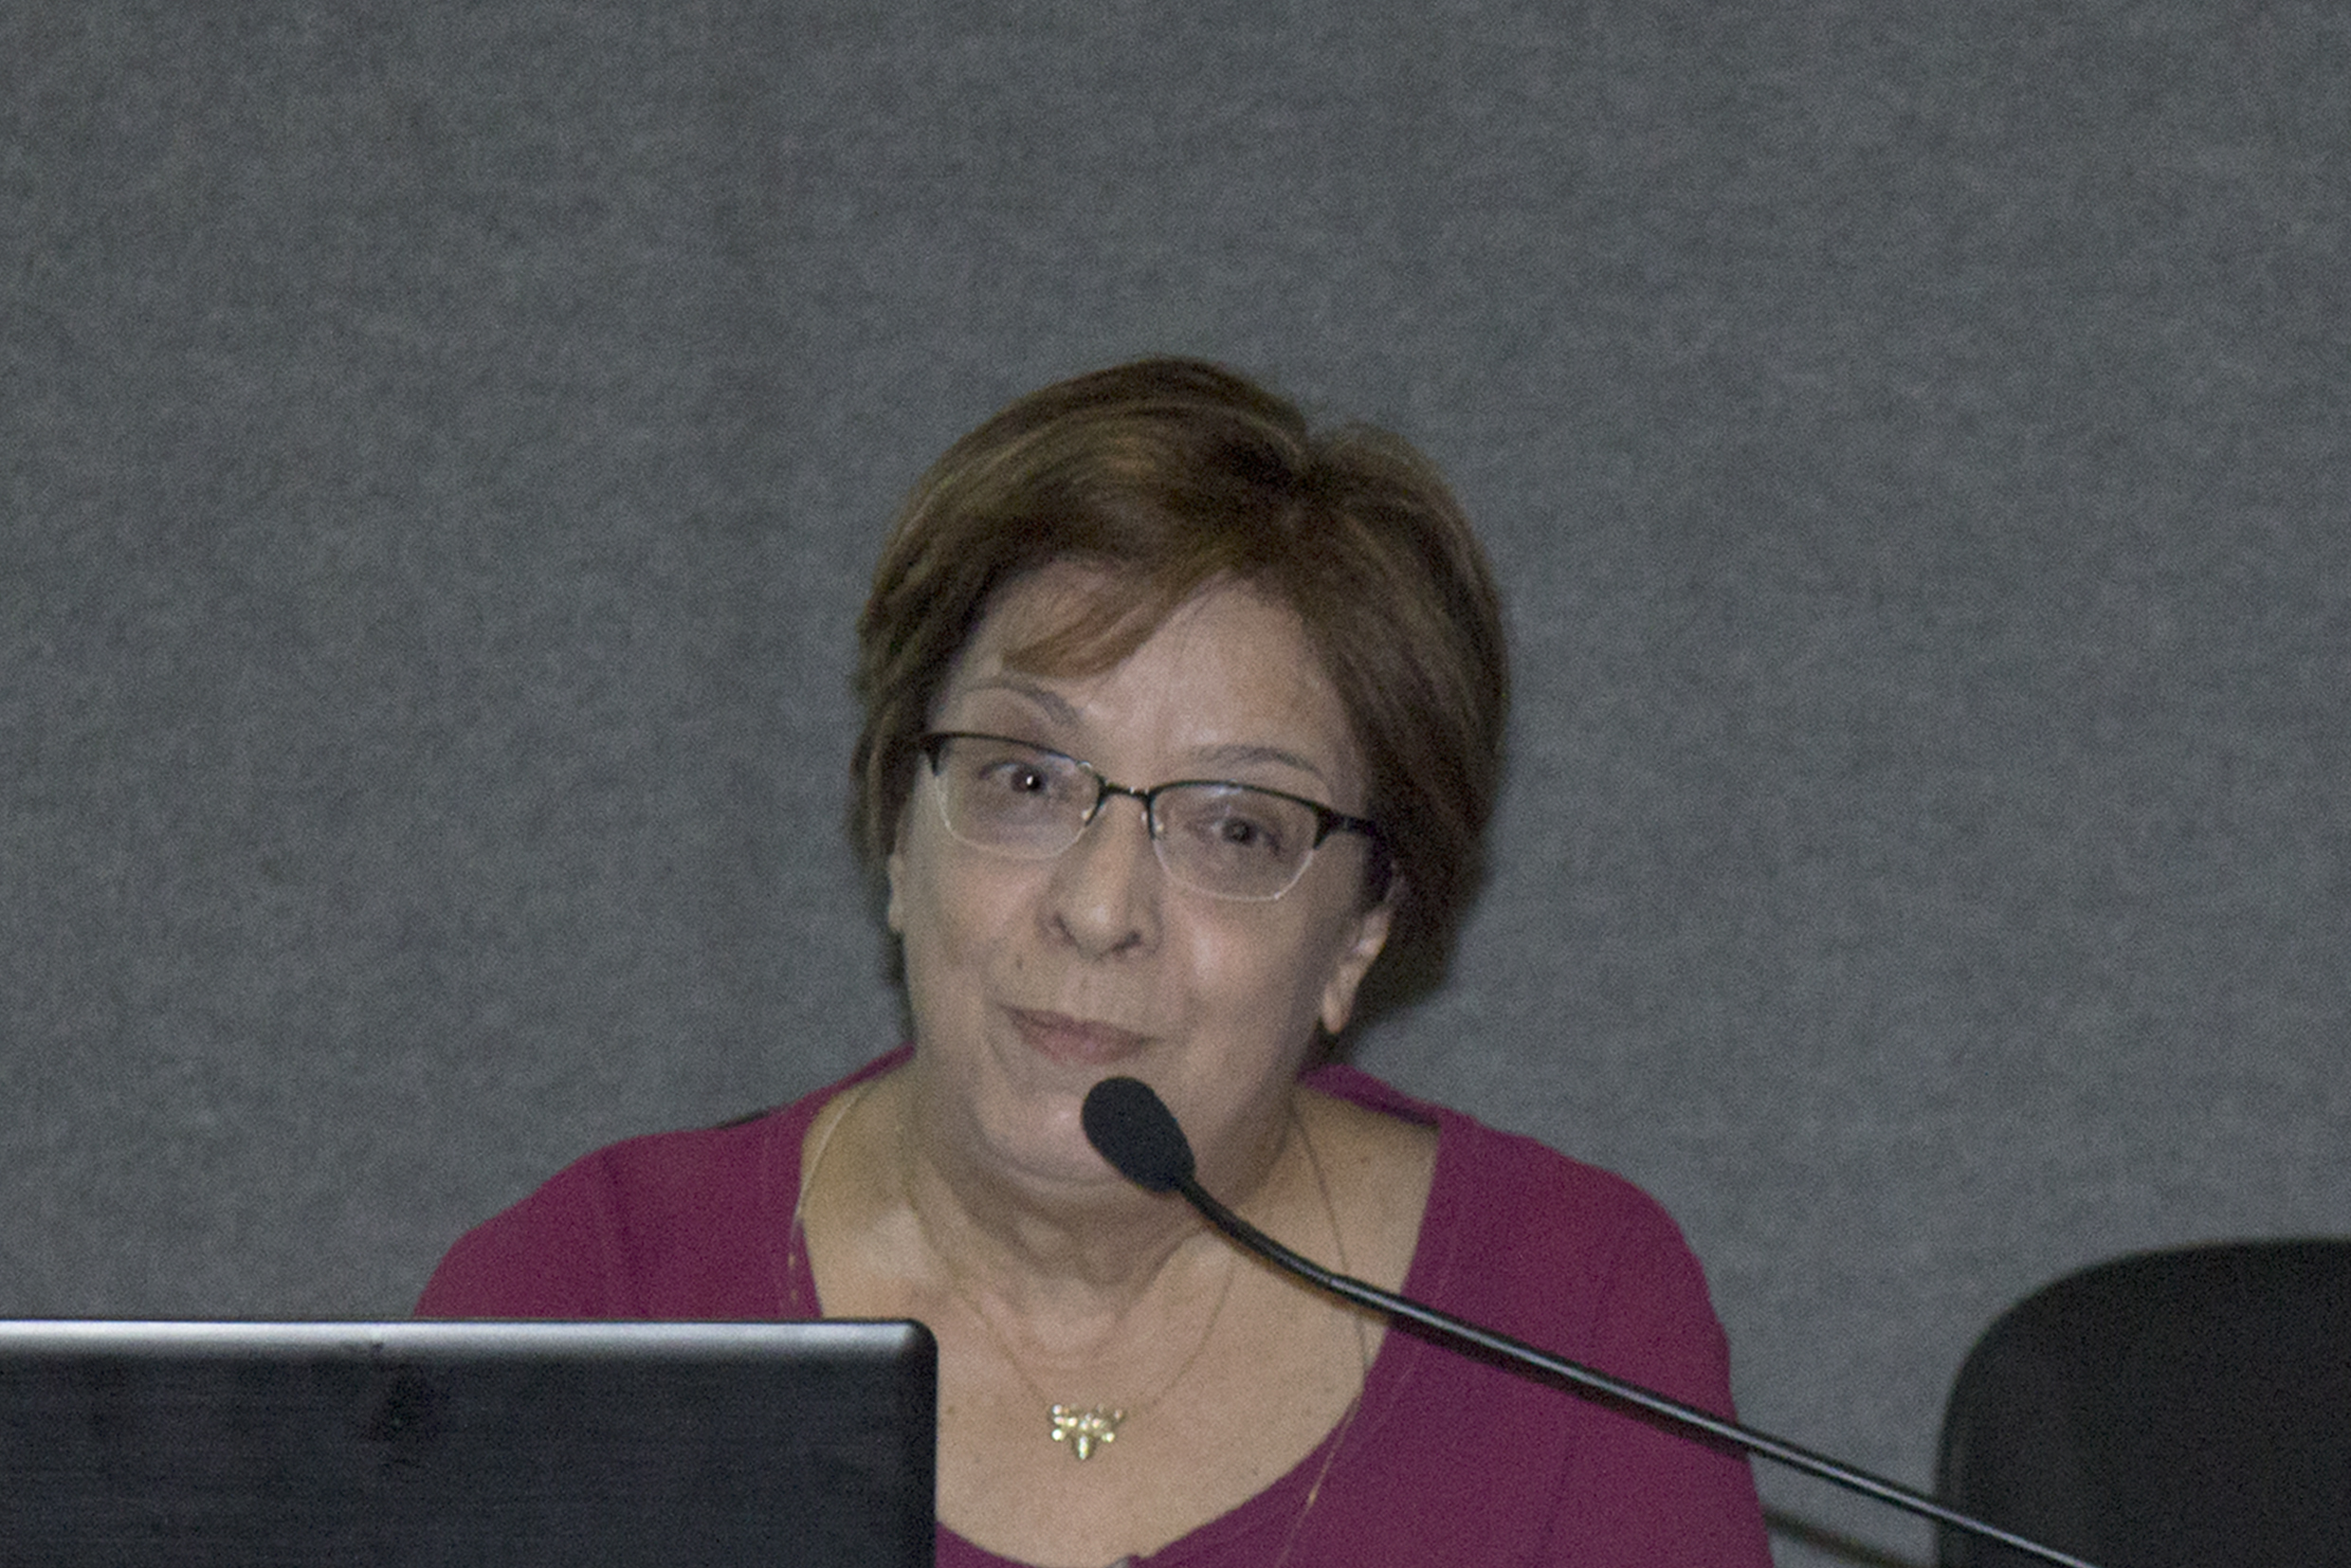 Conferência de Vera Imperatriz Fonseca - 25 de abril de 2015